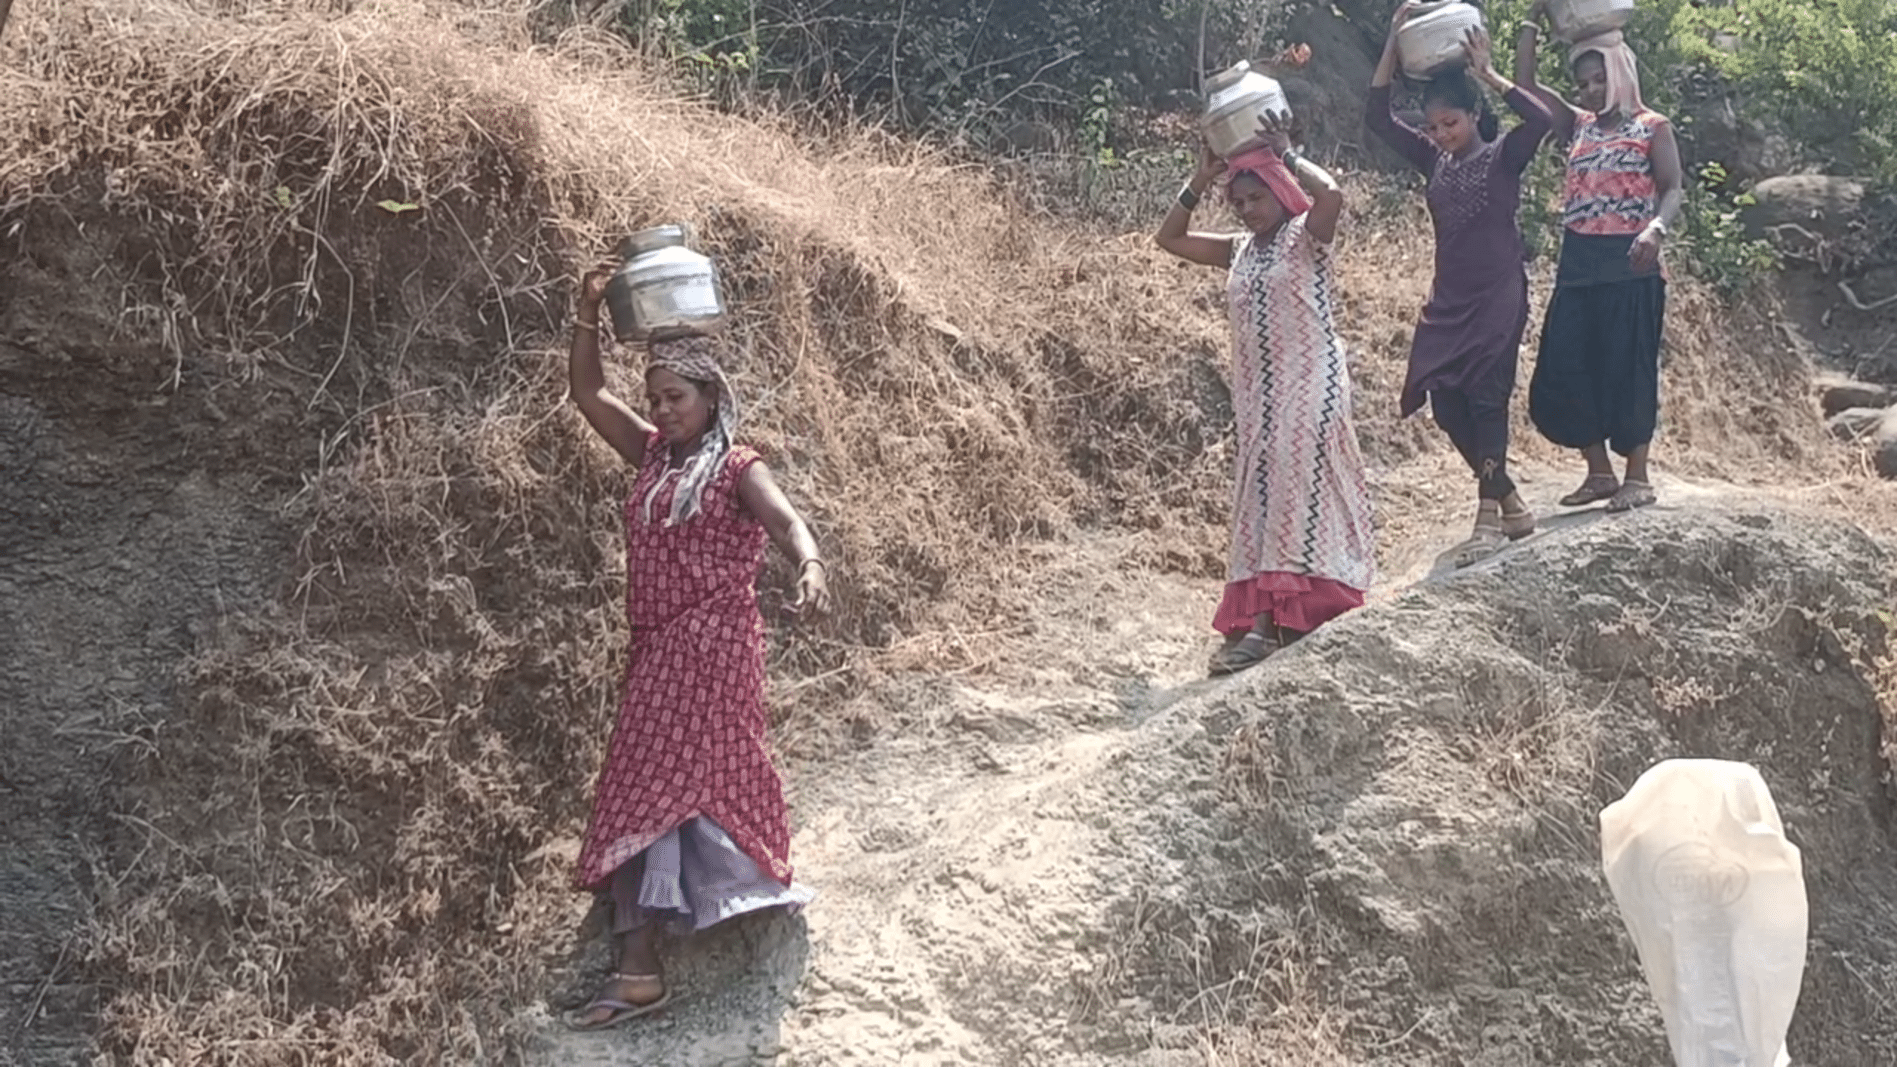 Water crisis in gujarat